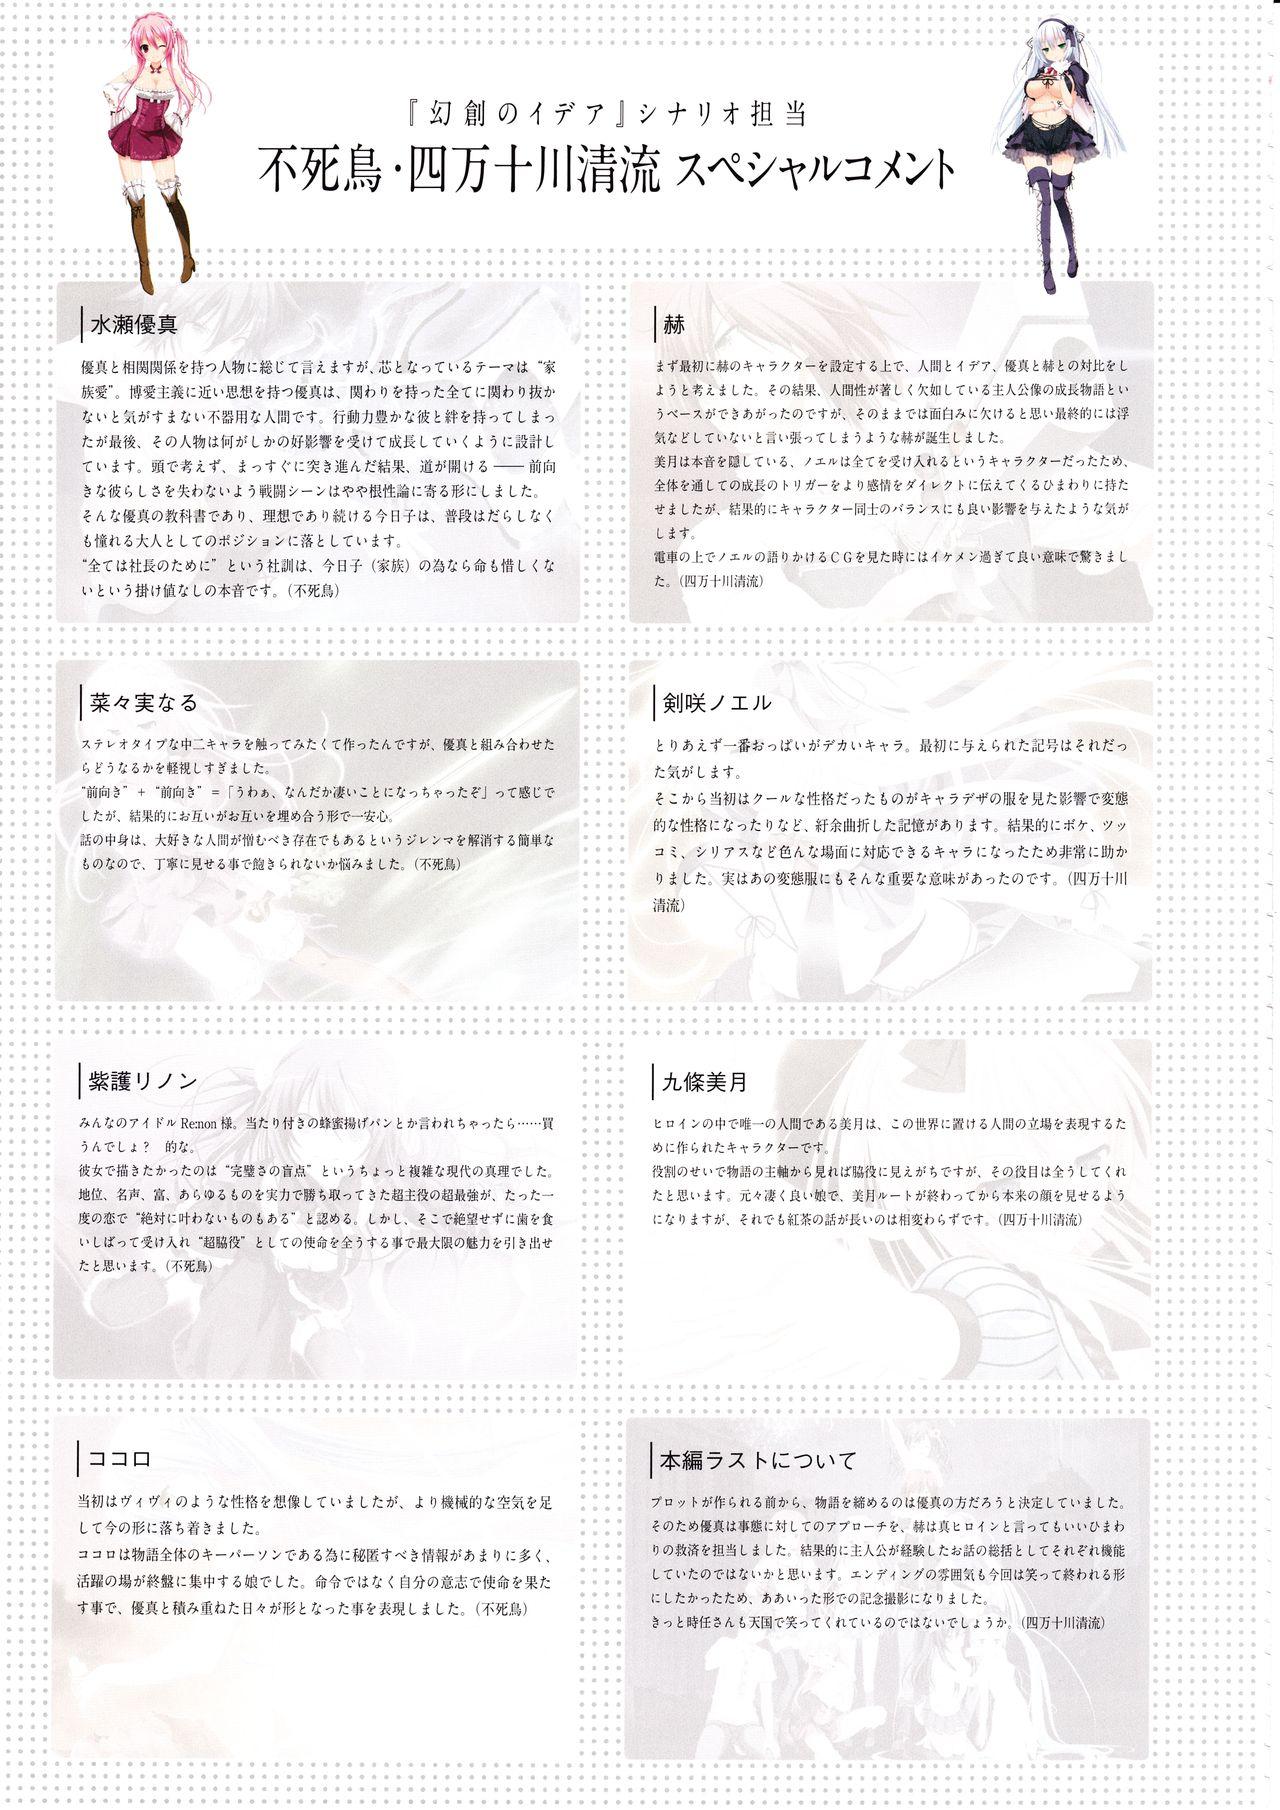 3rdEye Official Visual Fan Book RERUM MEMORIA 139